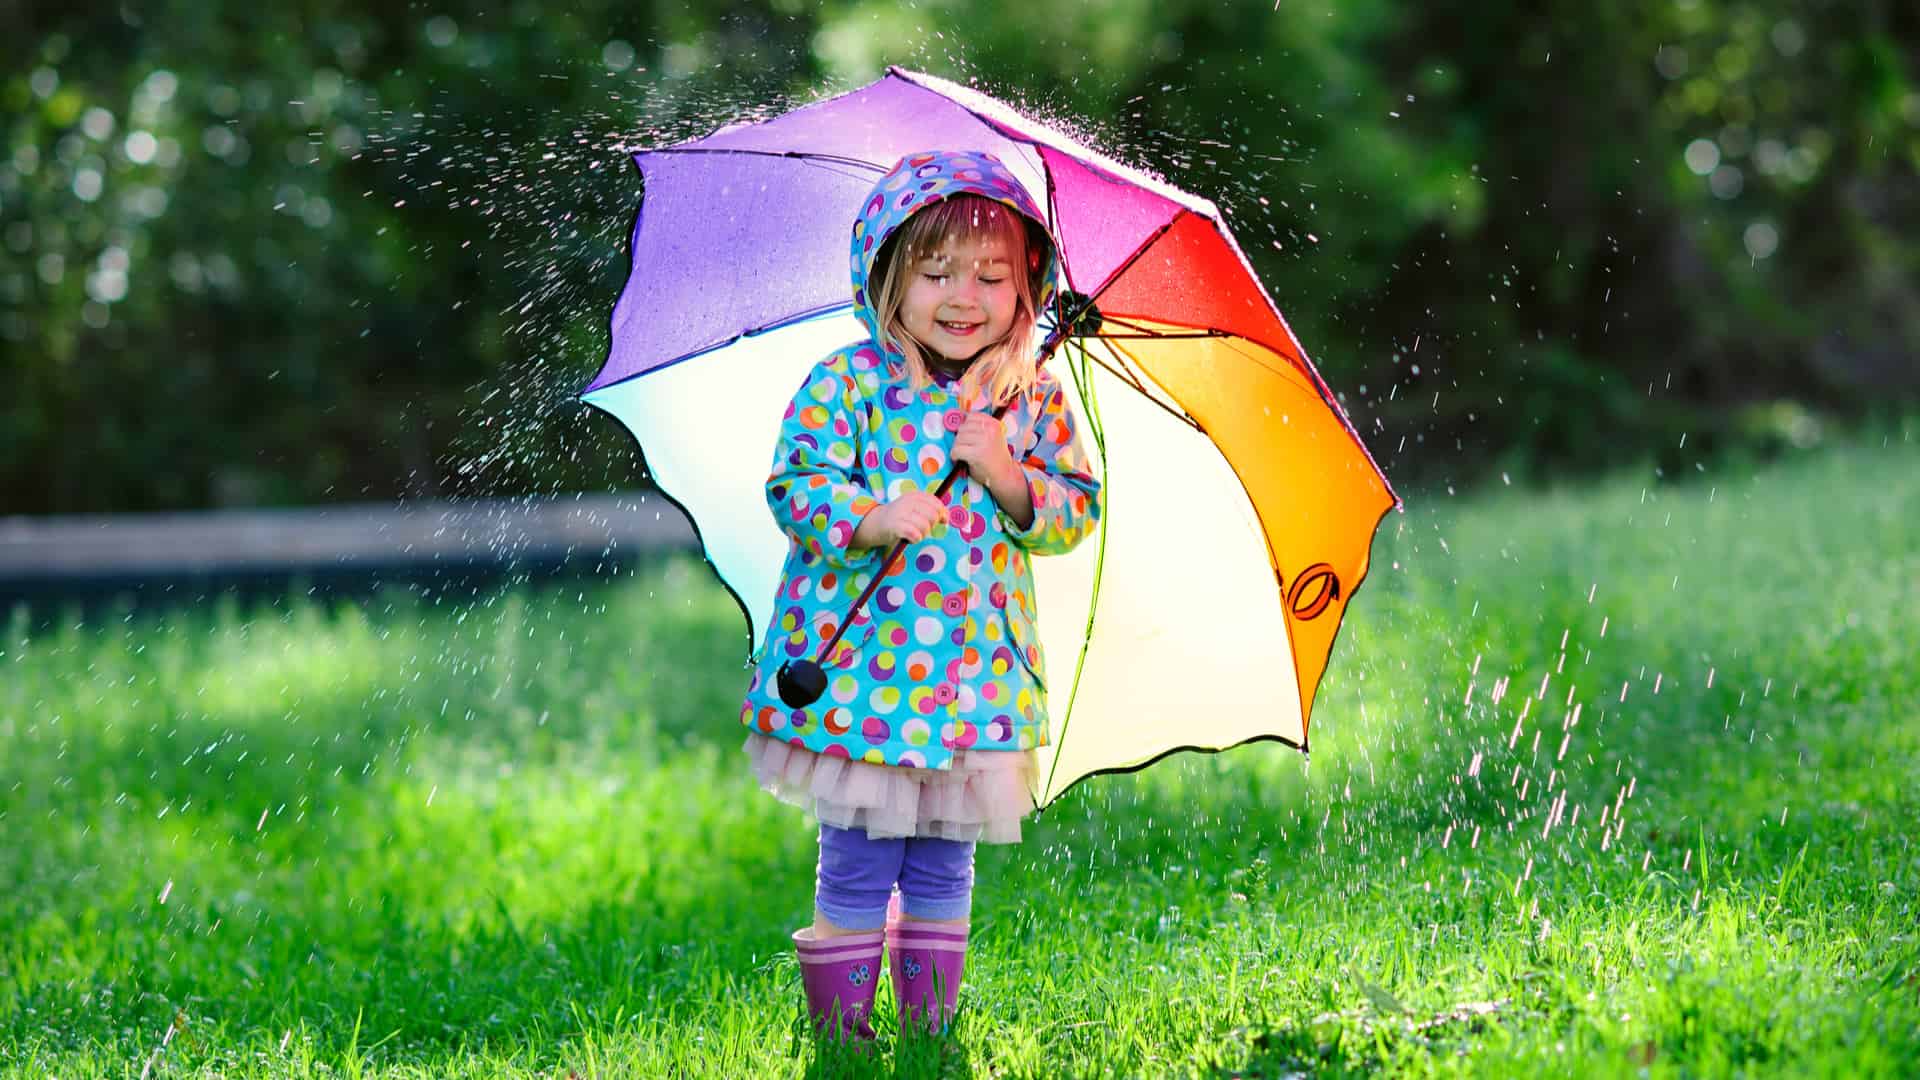 Cute girl standing in the rain under an umbrella in the grass